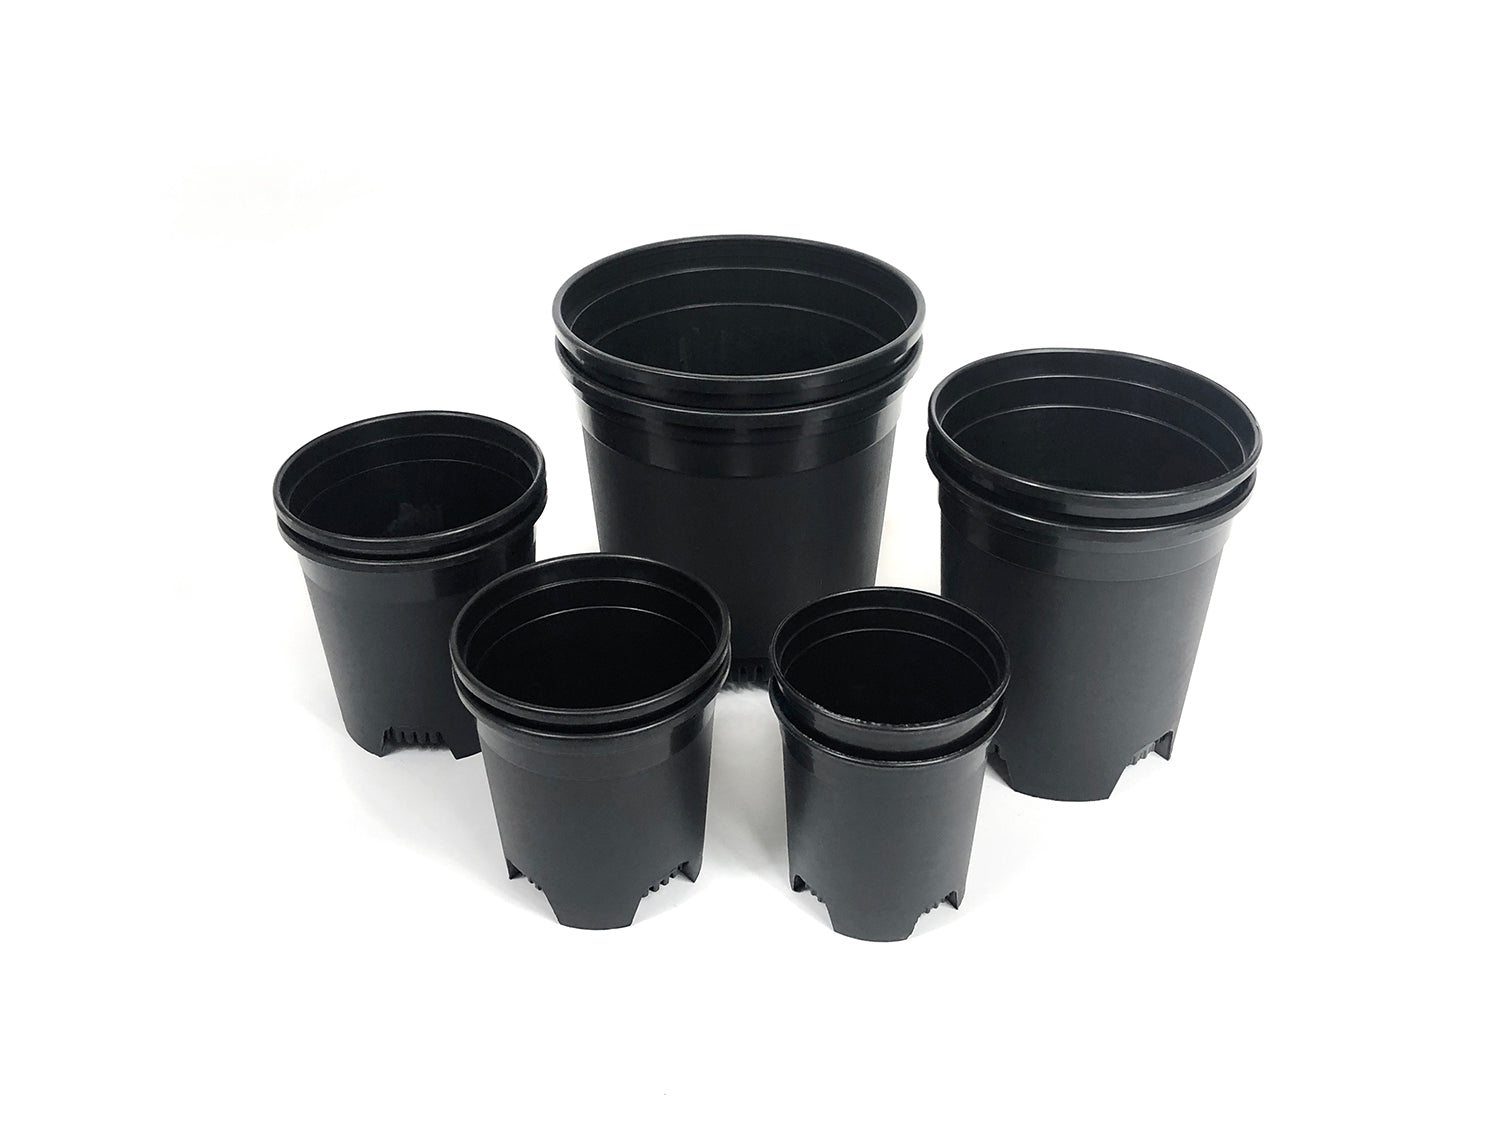 10 Pack Plastic Plant Pots Nursery Gardening Planters Variety Size